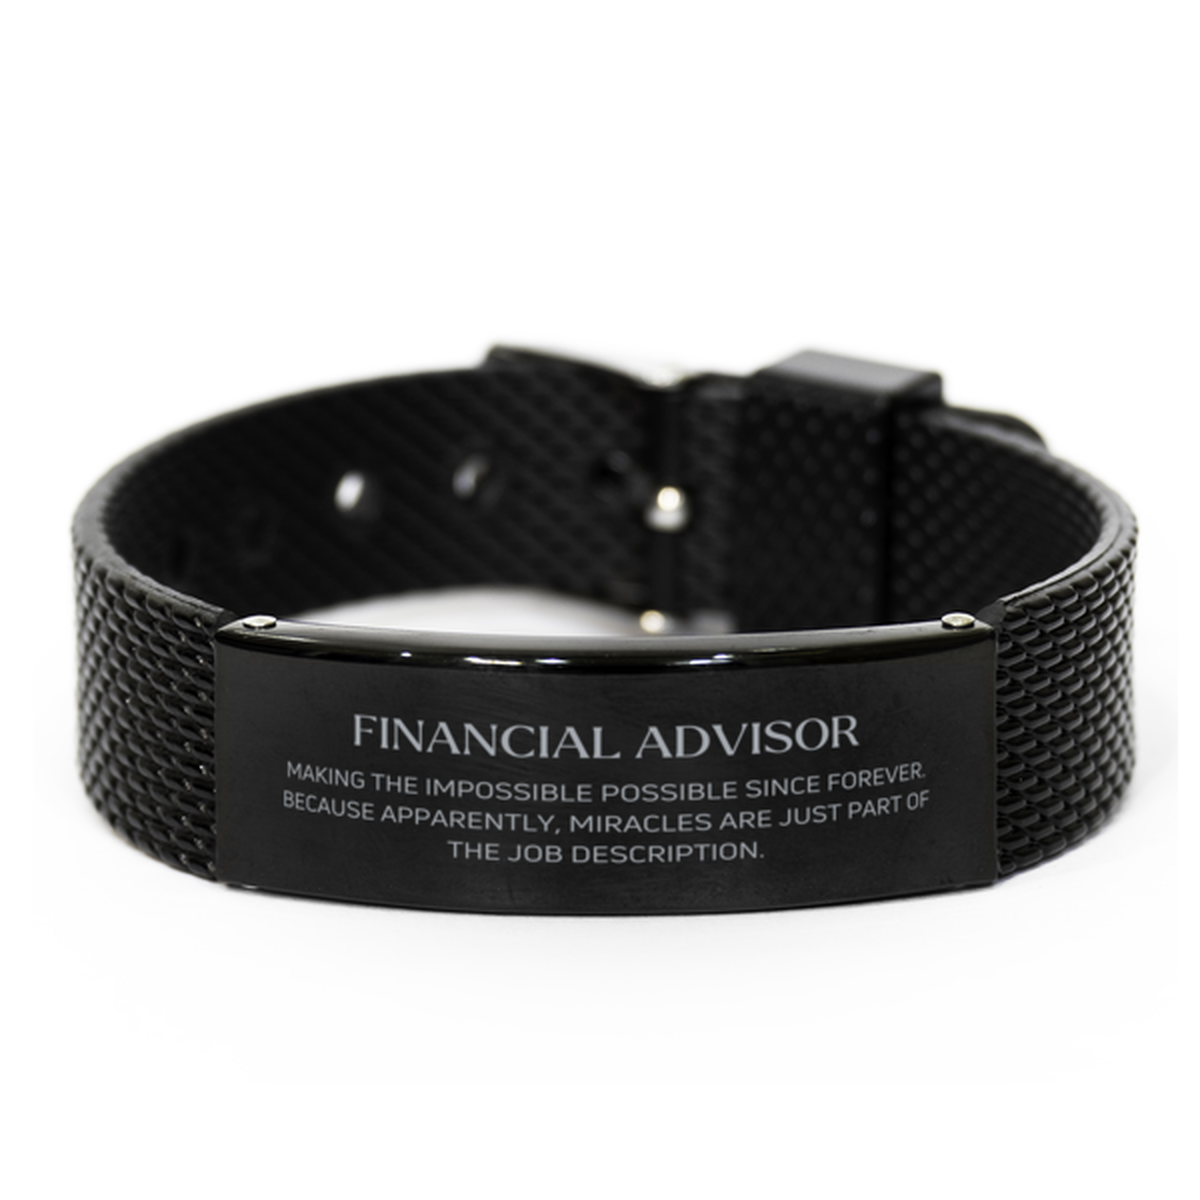 Funny Financial Advisor Gifts, Miracles are just part of the job description, Inspirational Birthday Black Shark Mesh Bracelet For Financial Advisor, Men, Women, Coworkers, Friends, Boss